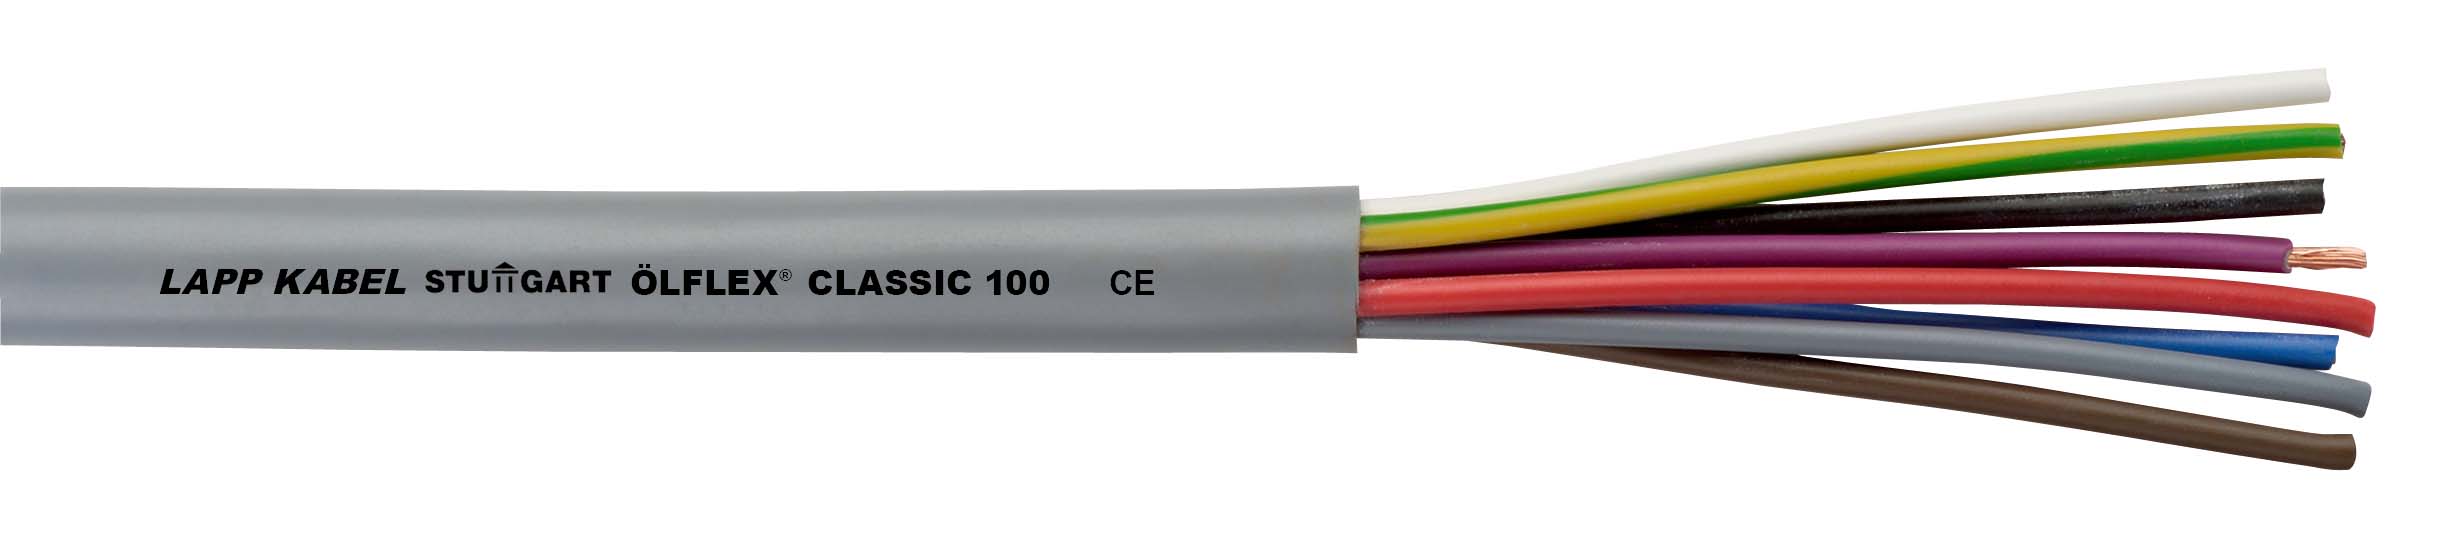 Lapp Kabel&Leitung ÖLFLEX CLASSIC 100 3G1,5 00100644 R100 - 00100644/100